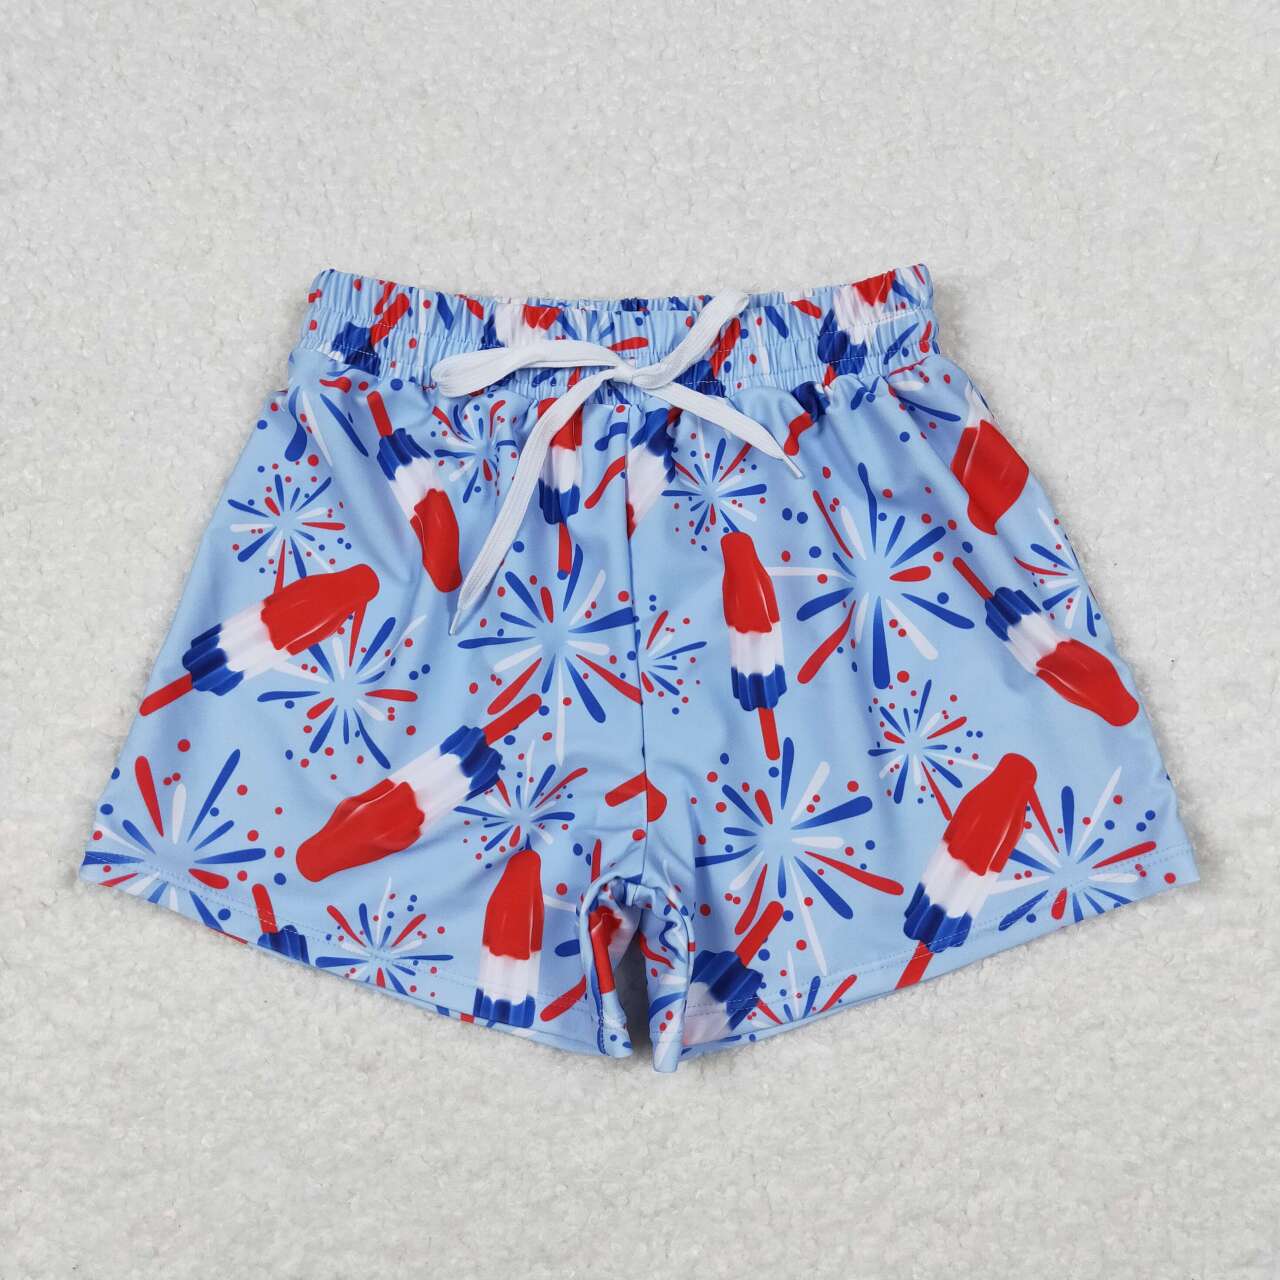 S0336 RTS 3-6M-6-7T baby boy clothes 4th of July patriotic boy summer swim shorts